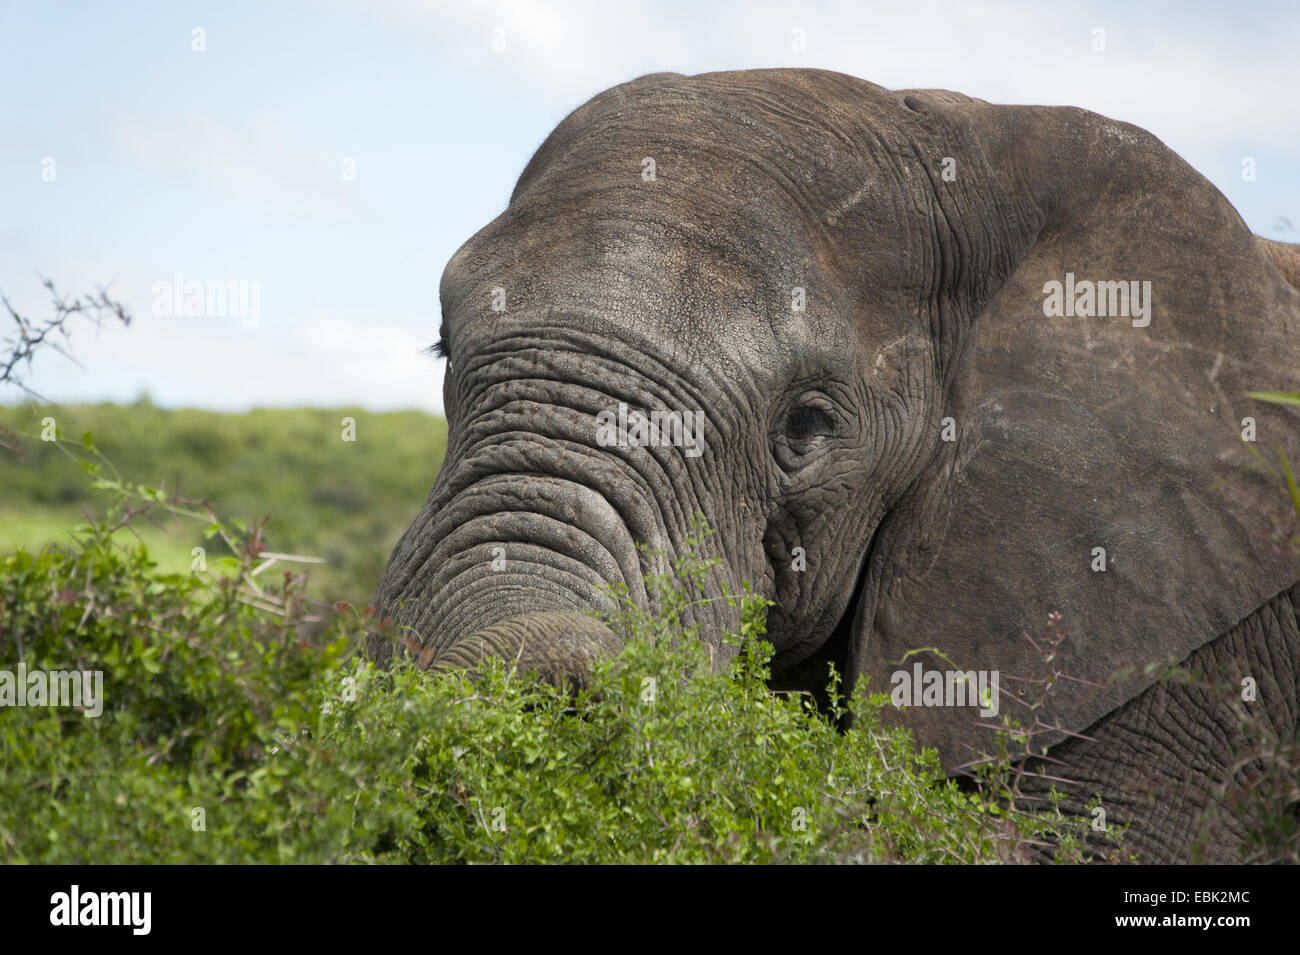 African elephant (Loxodonta africana), feeding on shrub, portrait, South Africa, Eastern Cape, Addo Elephant National Park Stock Photo